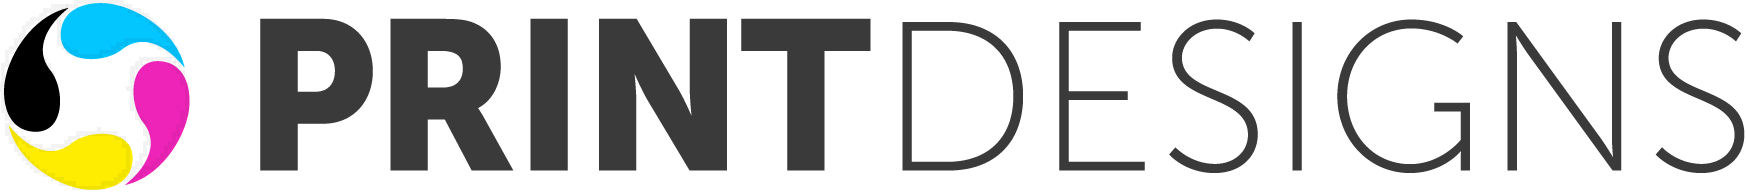 printdesigns logo